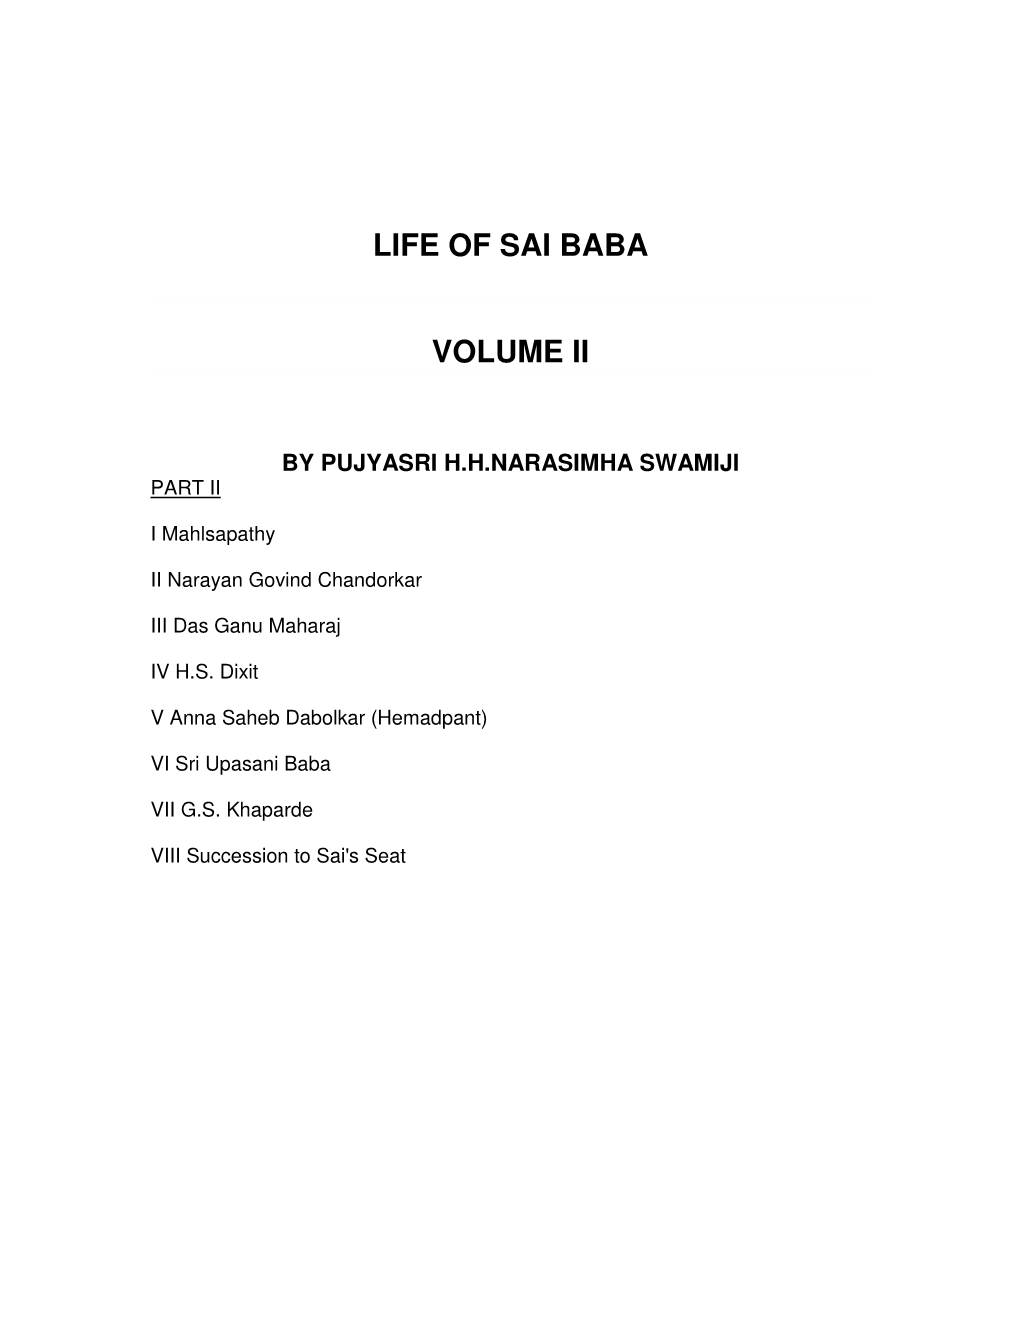 Life of Sai Baba Volume Ii